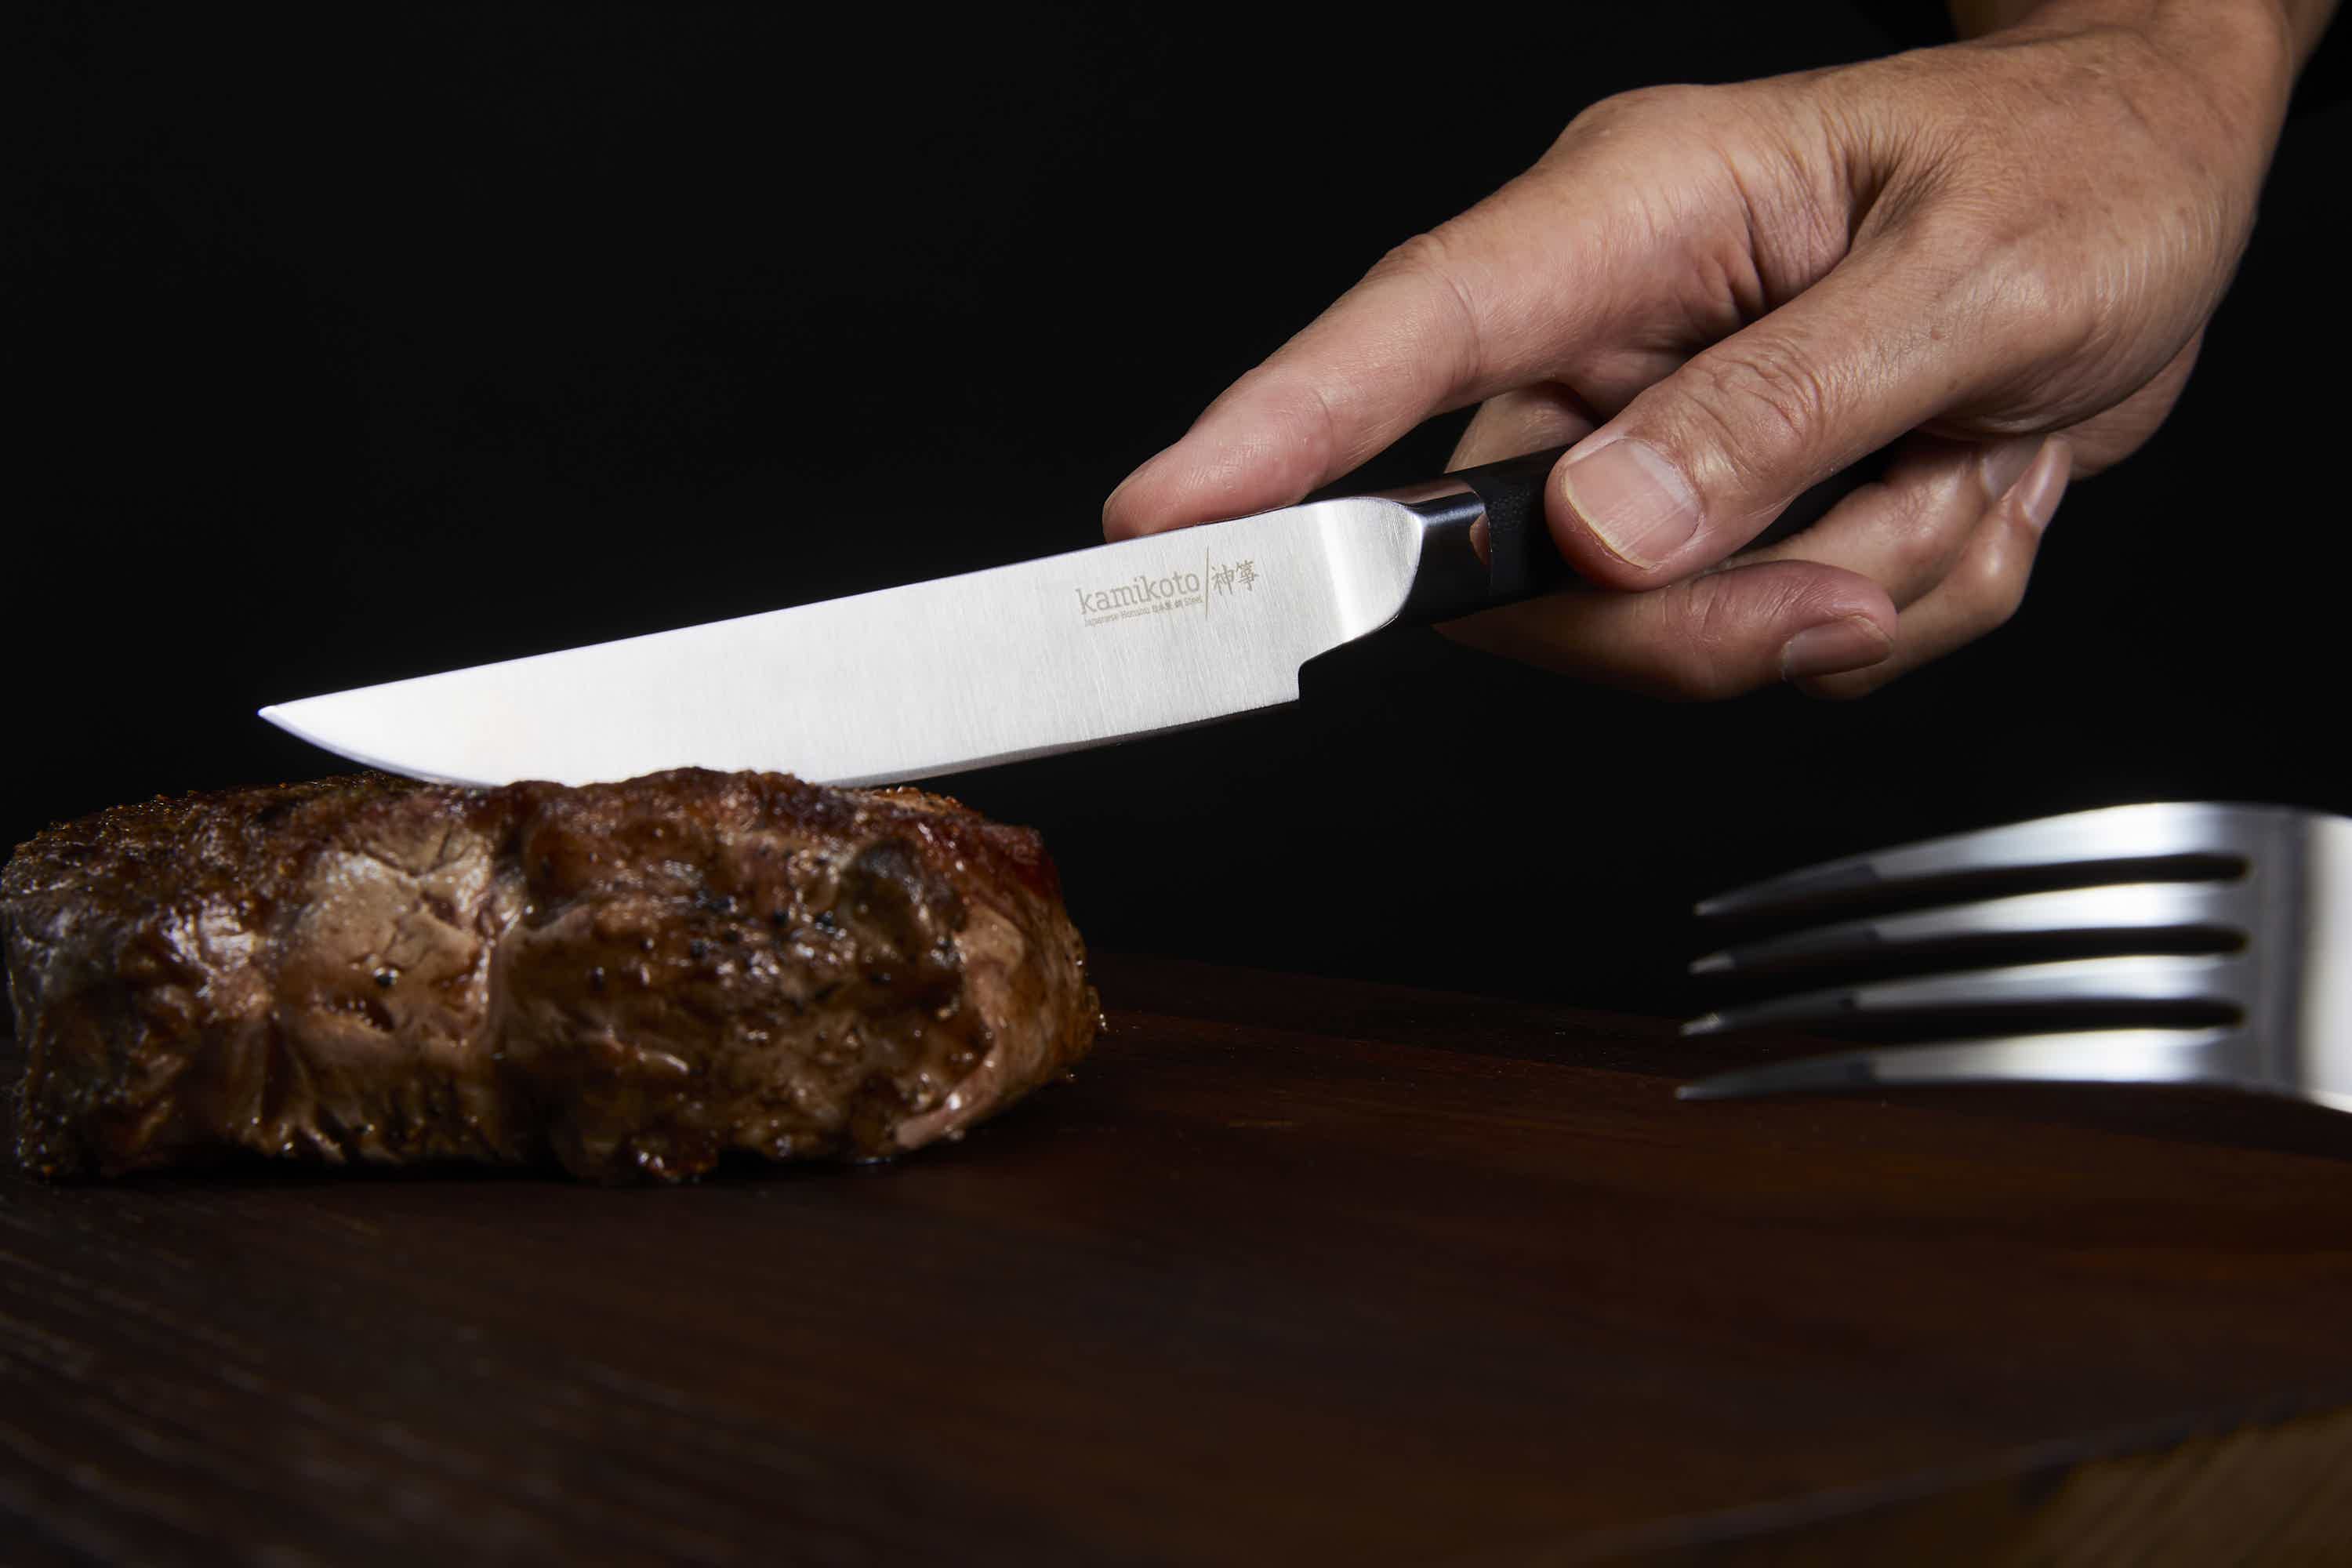 Kamikoto announces Steak Knives from Japanese Steel